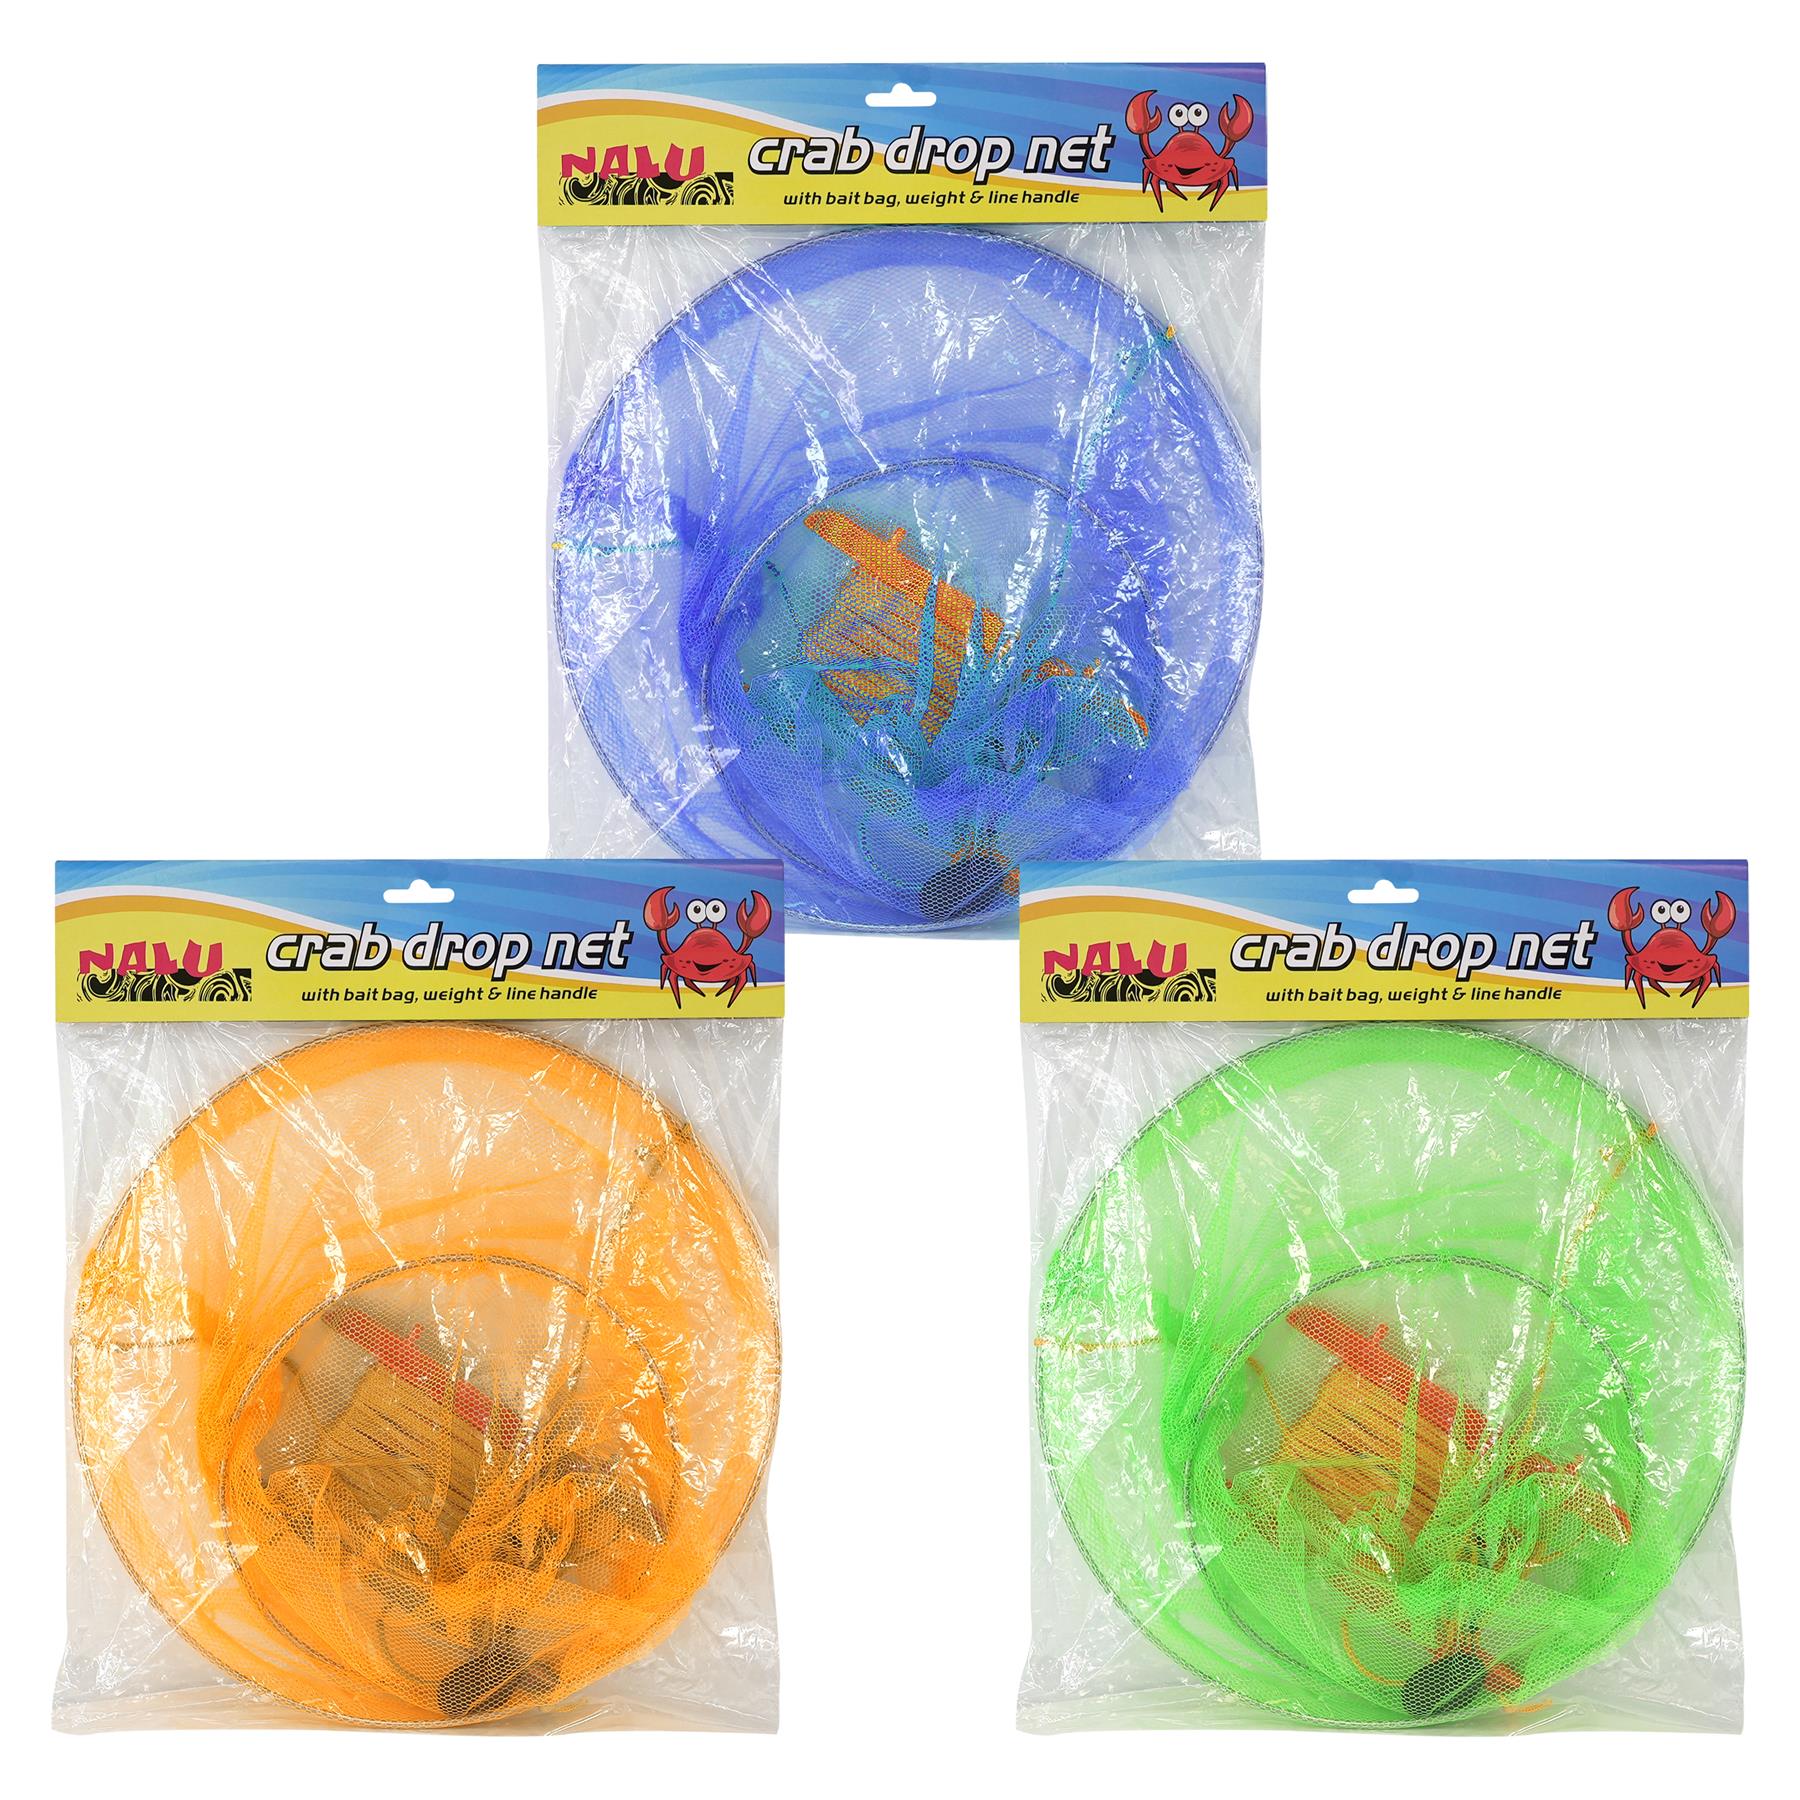 Kids Crab Drop Net w/ Net Bait Bag Holder Fishing by The Magic Toy Shop - The Magic Toy Shop